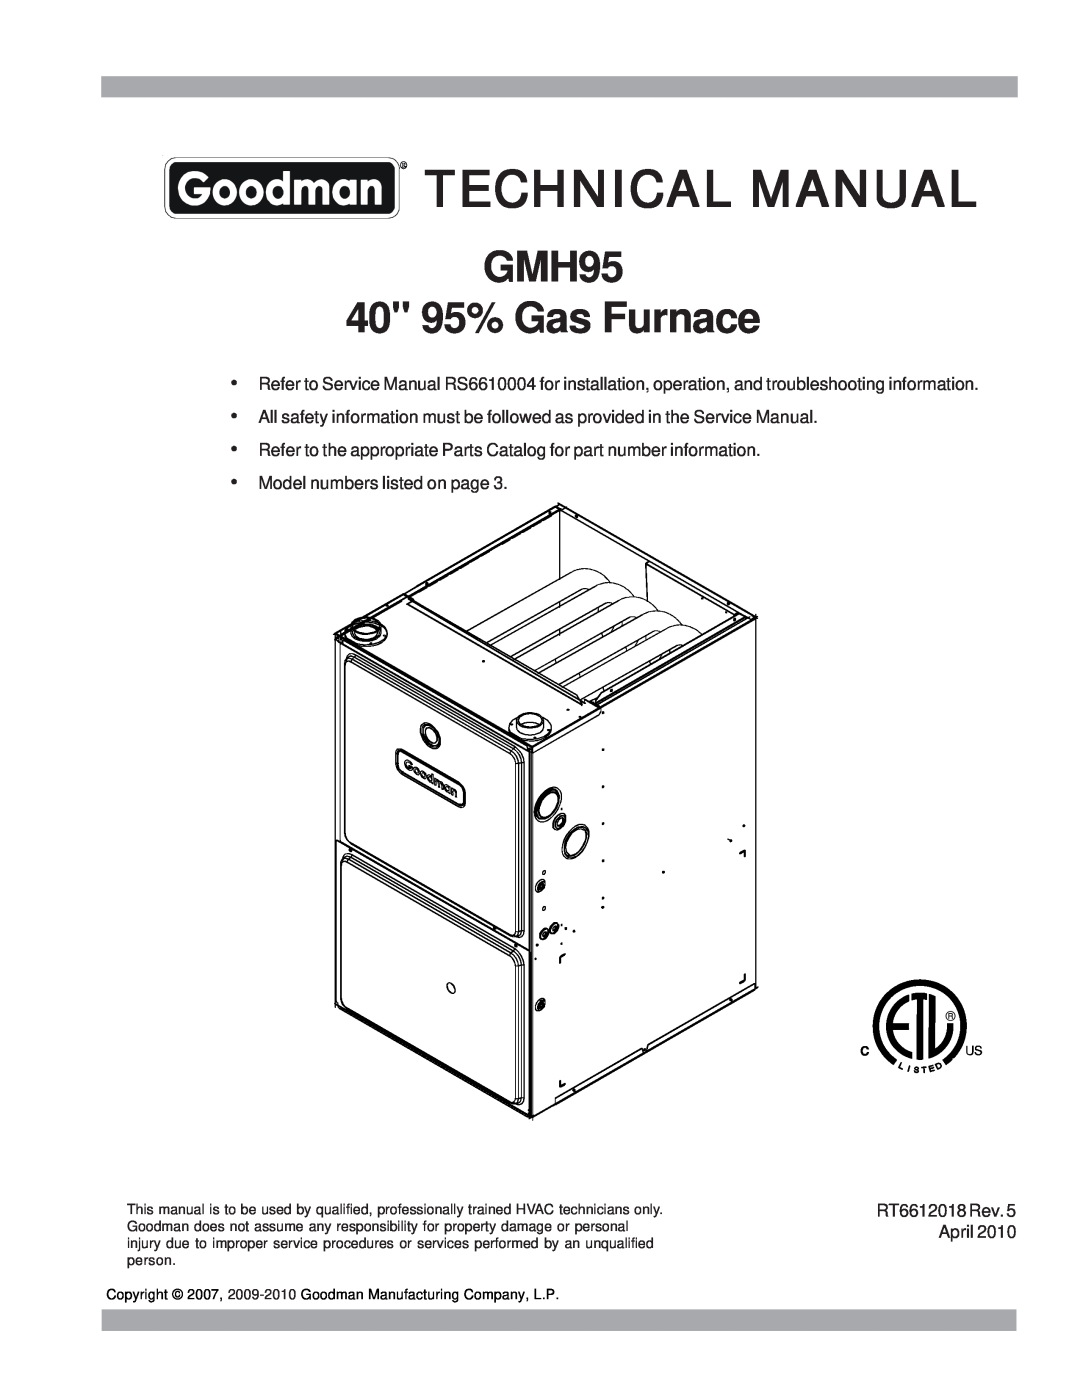 Goodman Mfg service manual GMH95 40 95% Gas Furnace, Technical Manual 